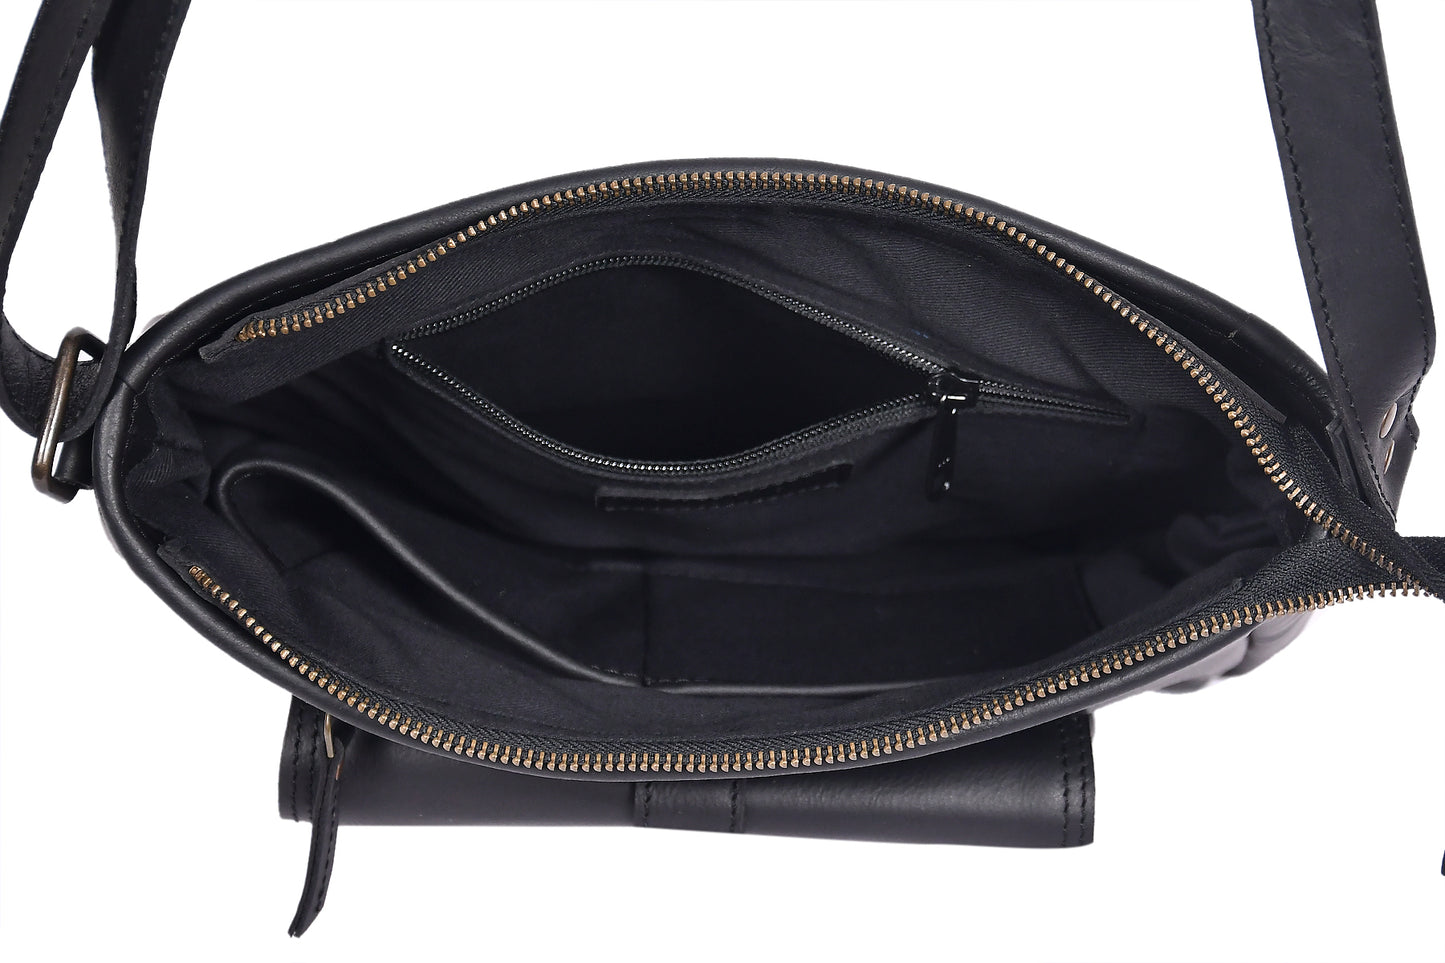 Elegance Redefined: Black Leather Sling Bag - Your Perfect Fashion Com ...